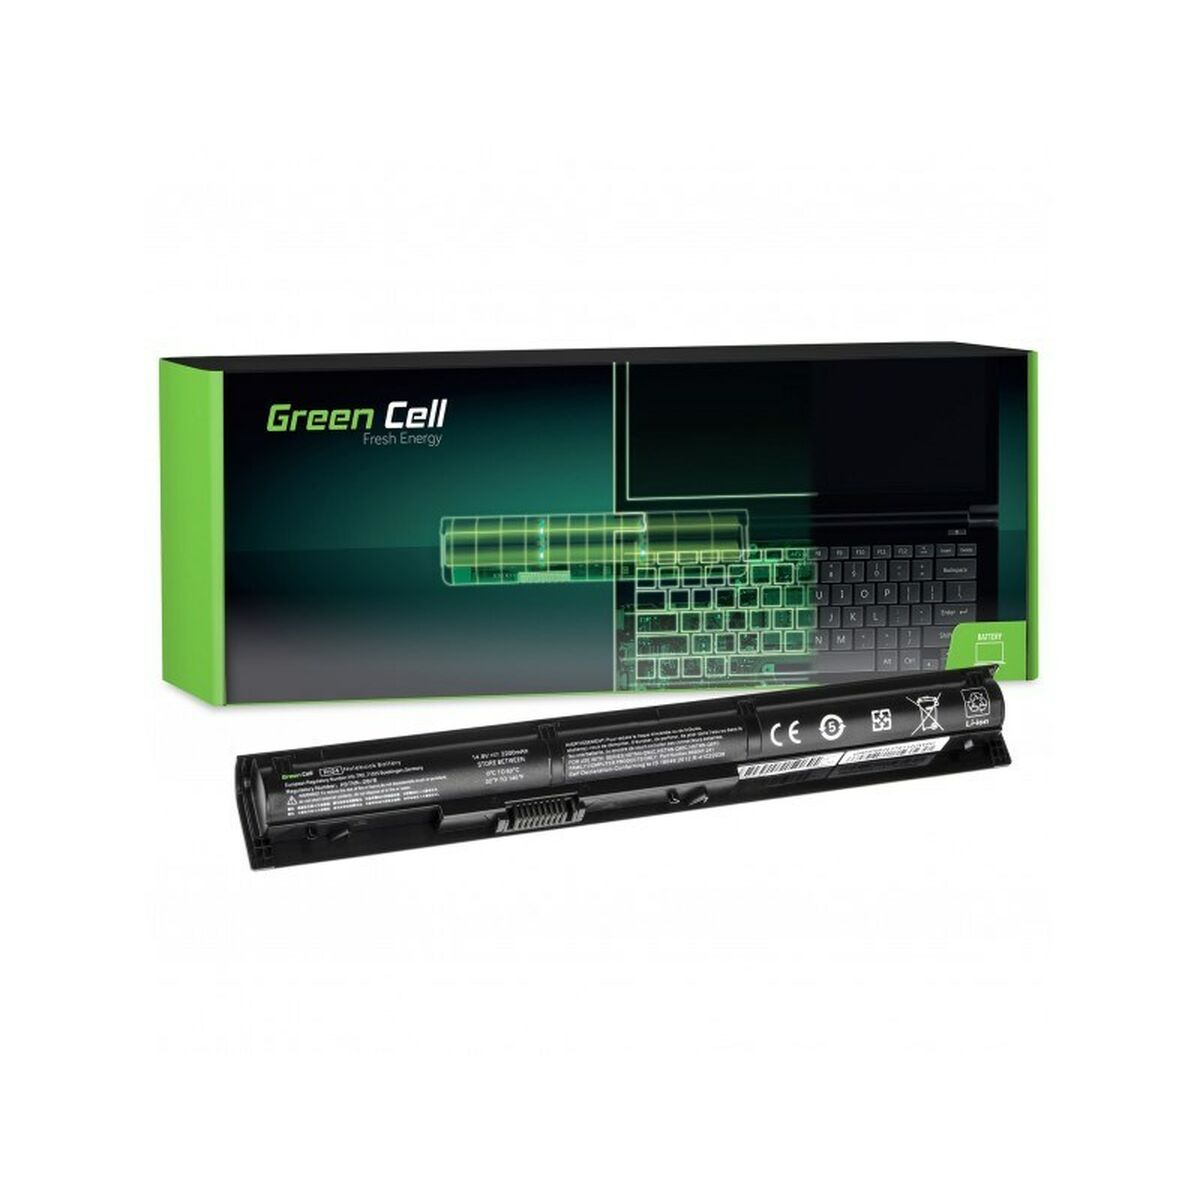 Laptop batteri Green Cell HP96 Sort 2200 mAh